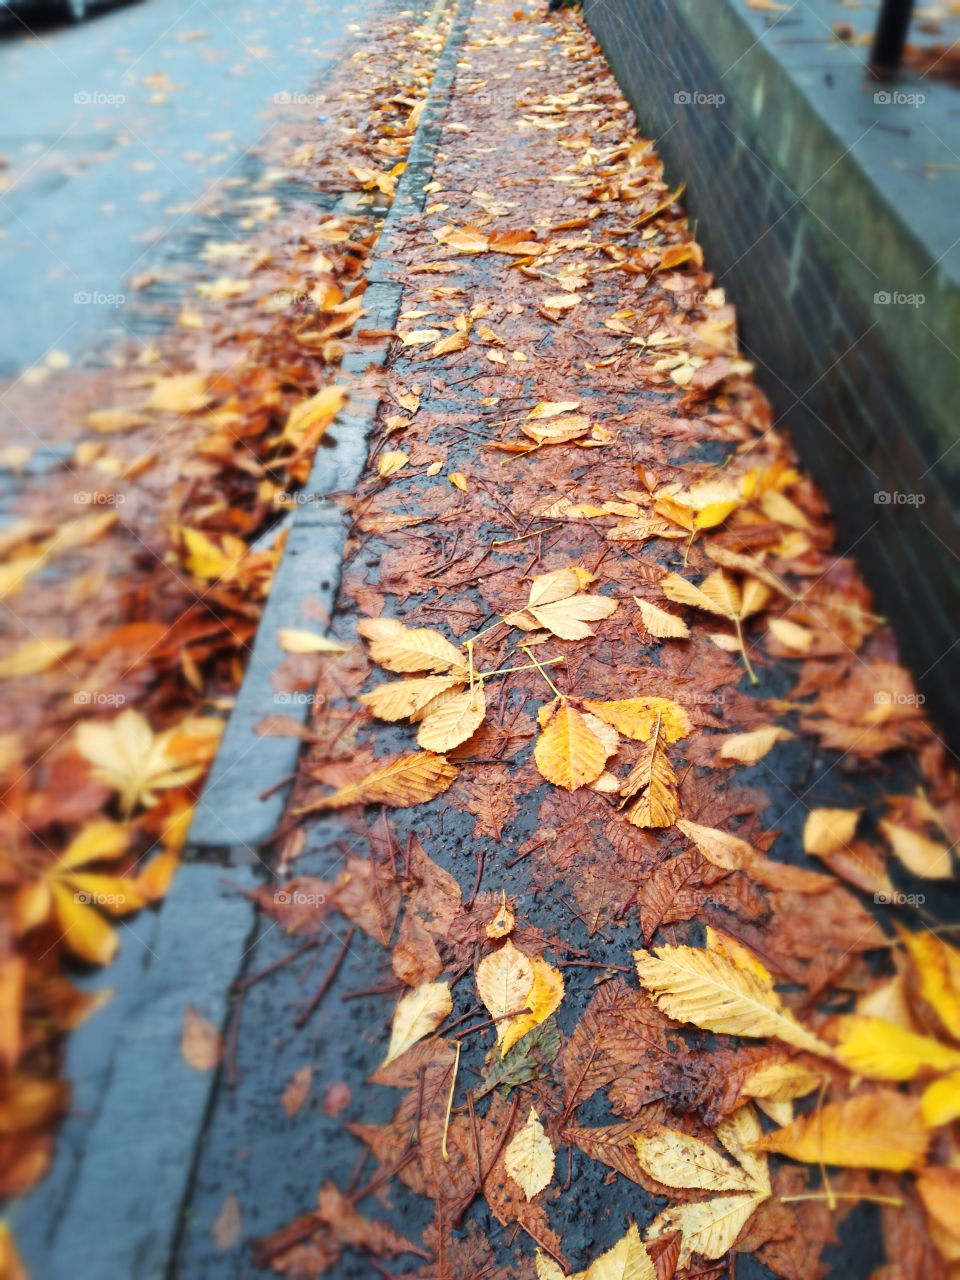 Wet autumn leaf on street